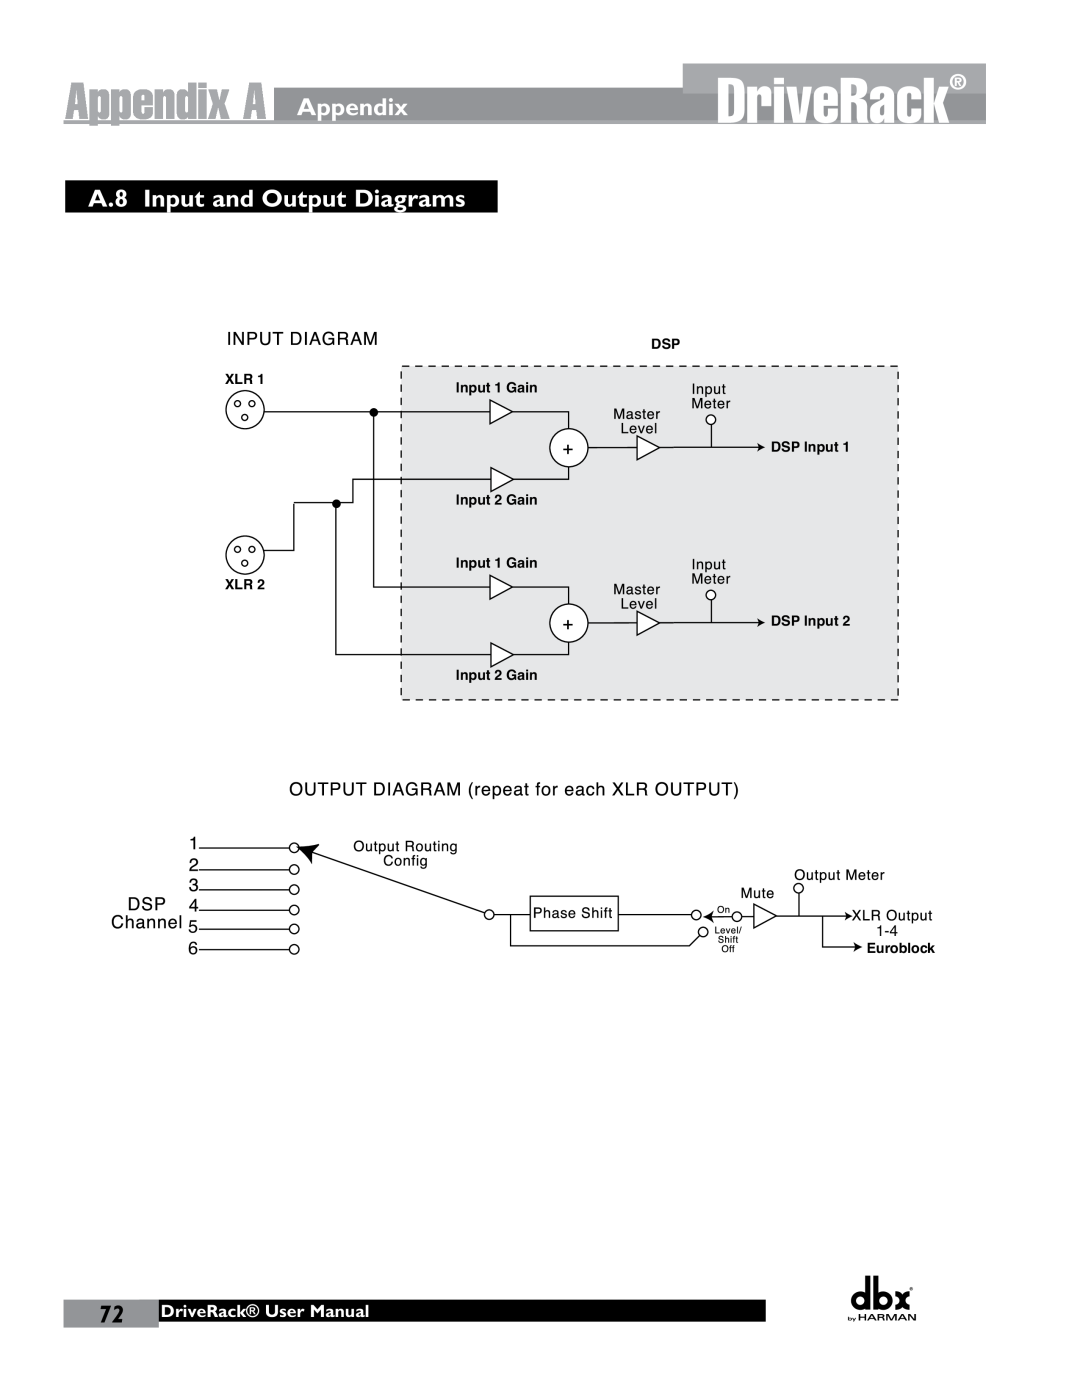 JBL 260 Appendix A, A.8 Input and Output Diagrams, DriveRack User Manual, Xlr Xlr, DSP Input 1 Gain, Input 2 Gain 